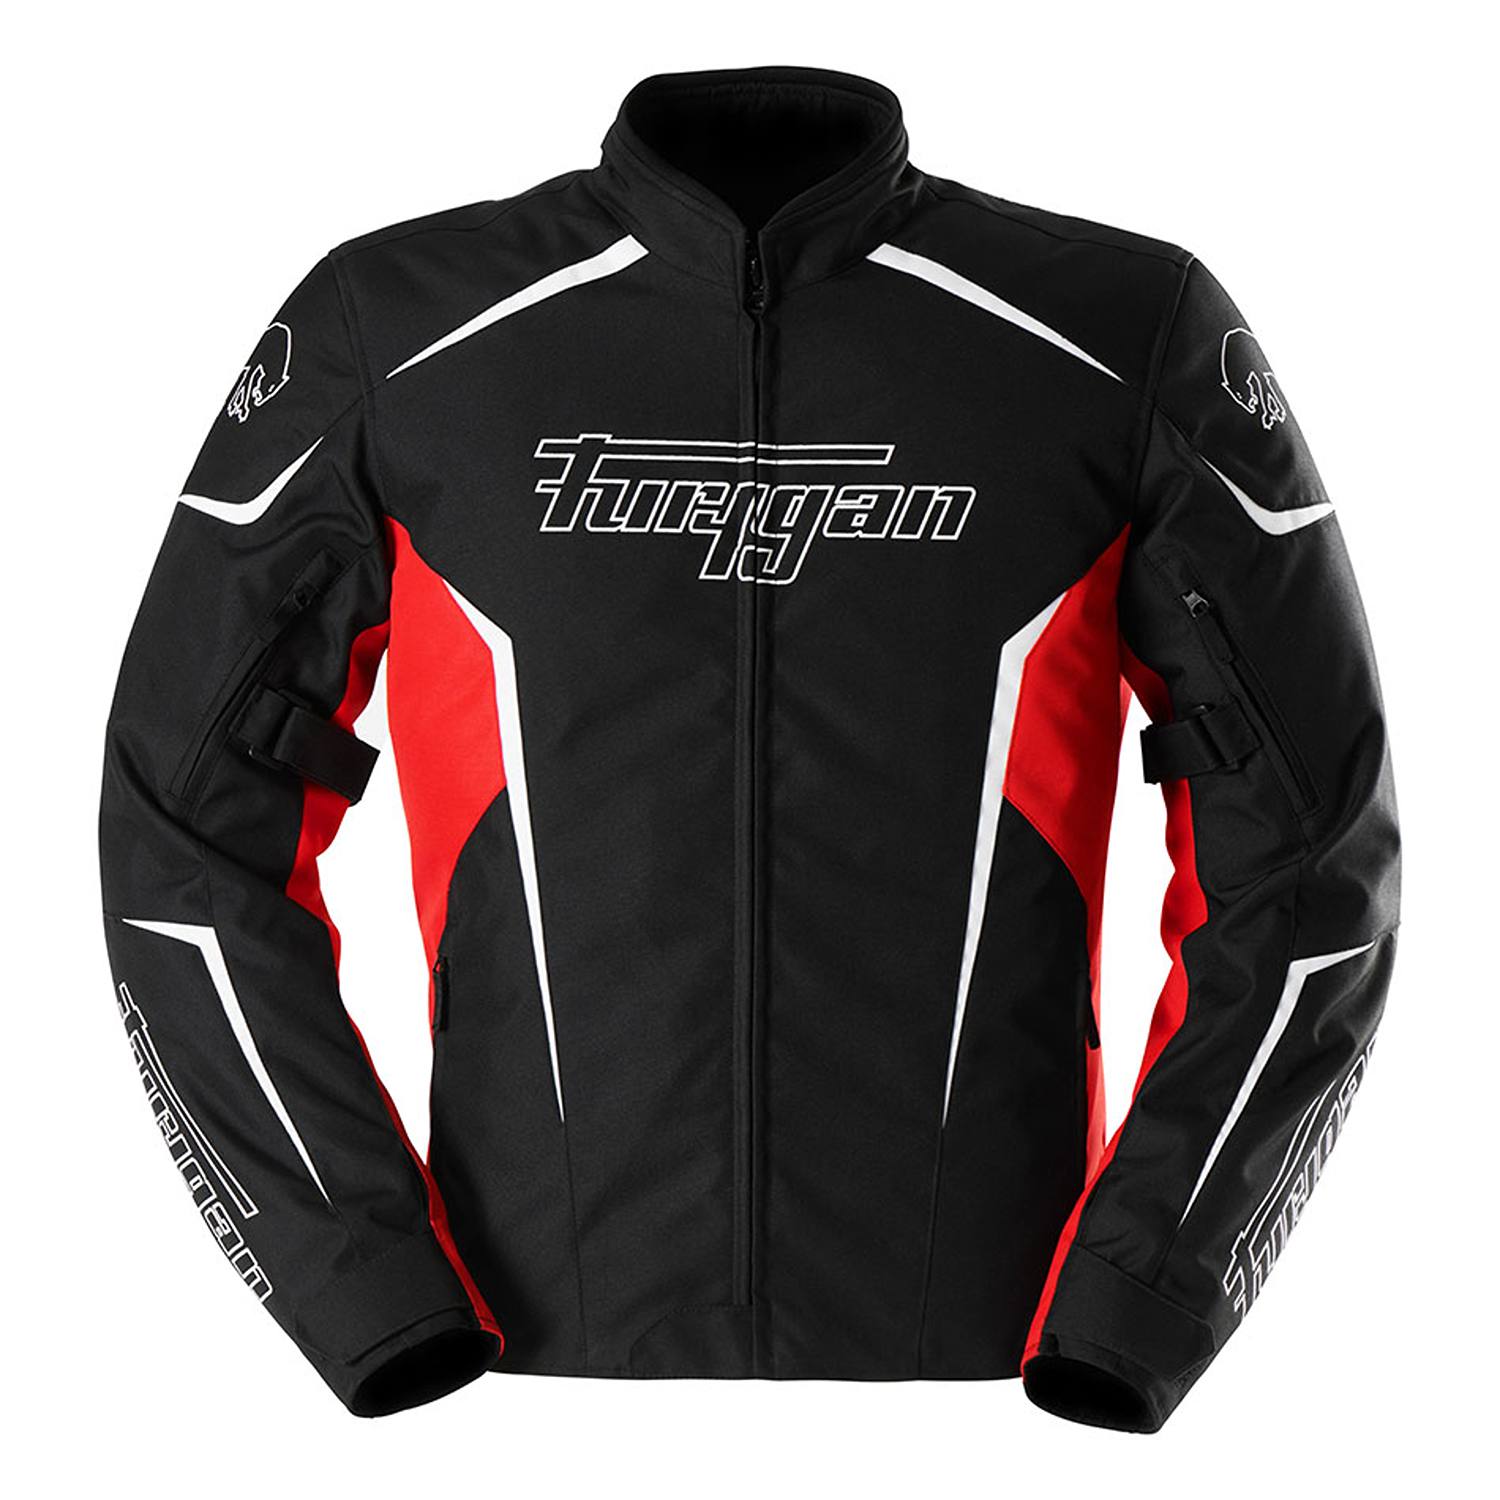 Image of Furygan Yori Jacket Black Grey Red Size L ID 3435980354671